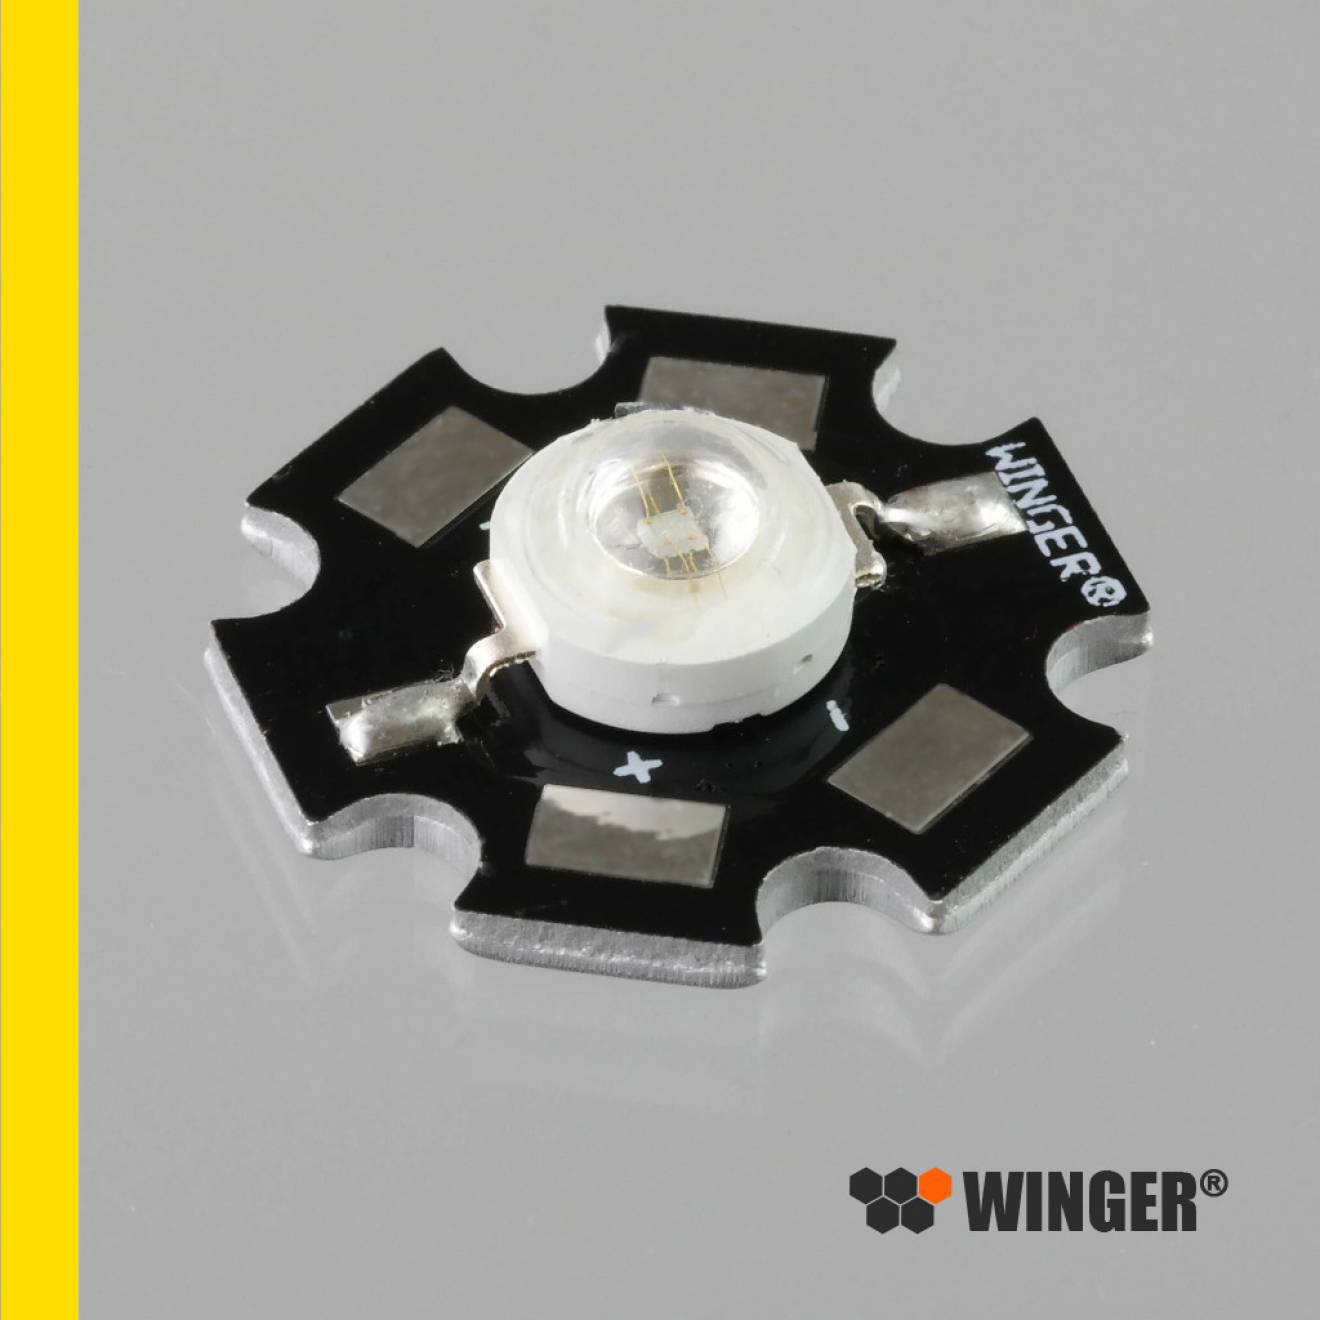 WINGER® WEPYE3-S1 Power LED Star gelb (590nm) 3W - 85lm